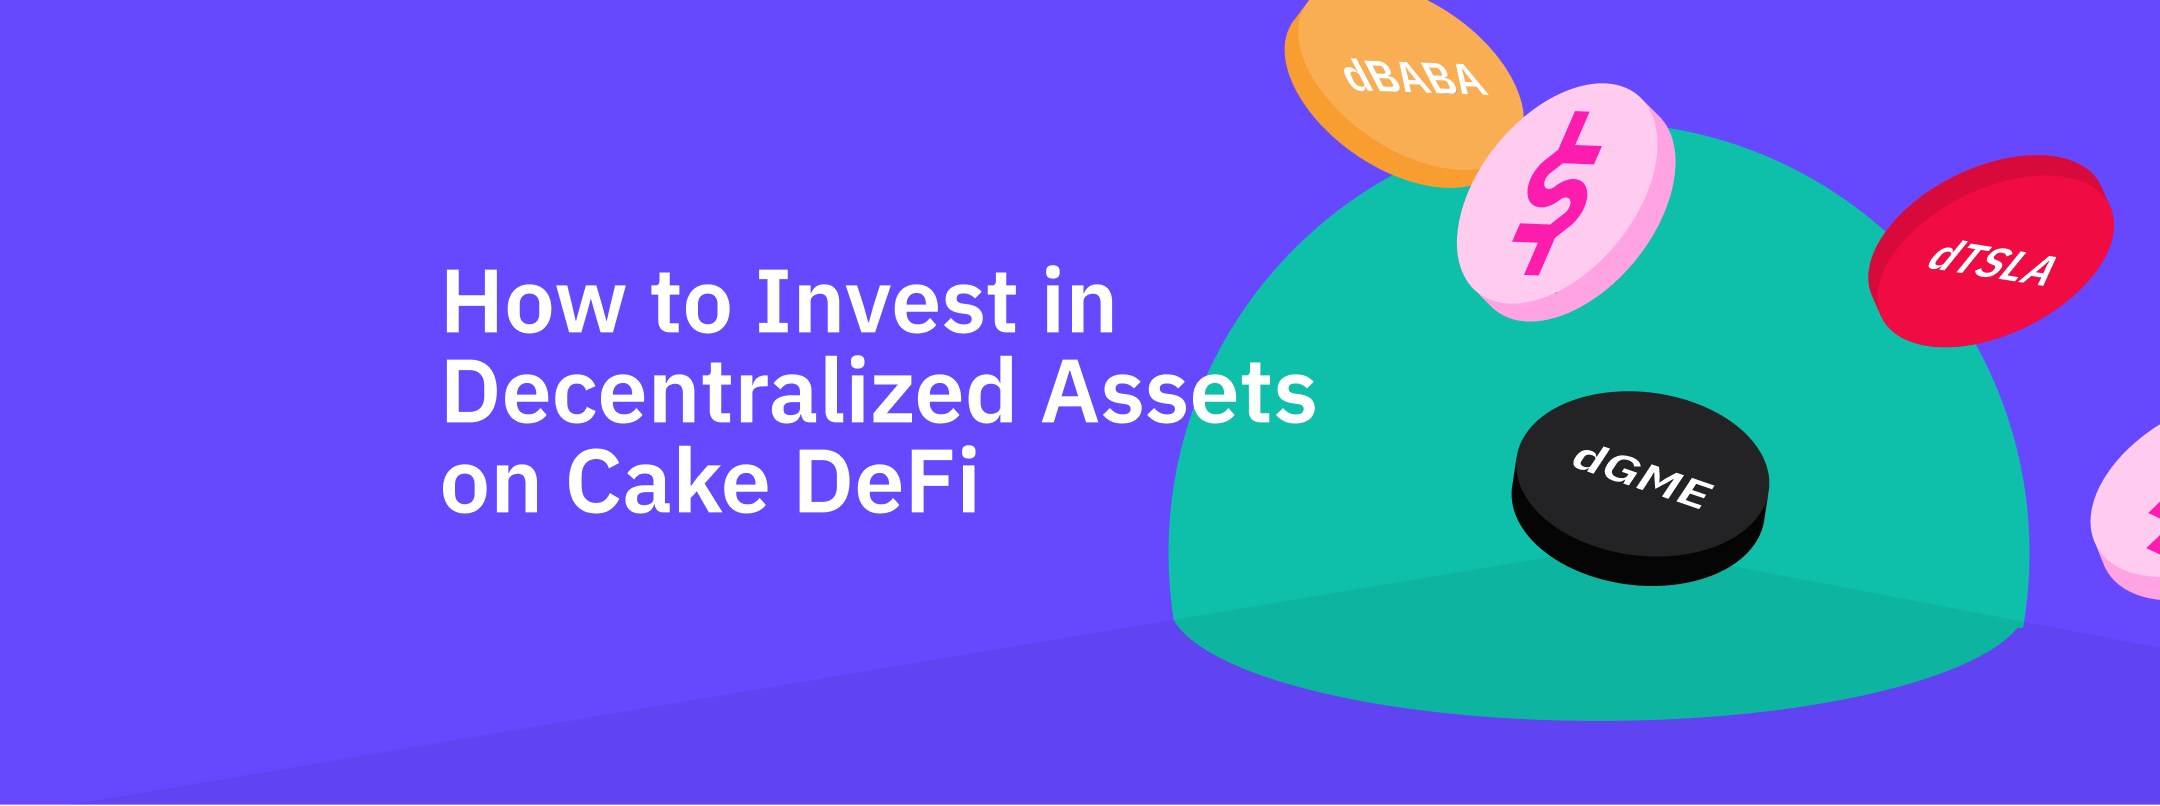 Invest in Decentralized Assets such as dTSLA on Cake DeFi!